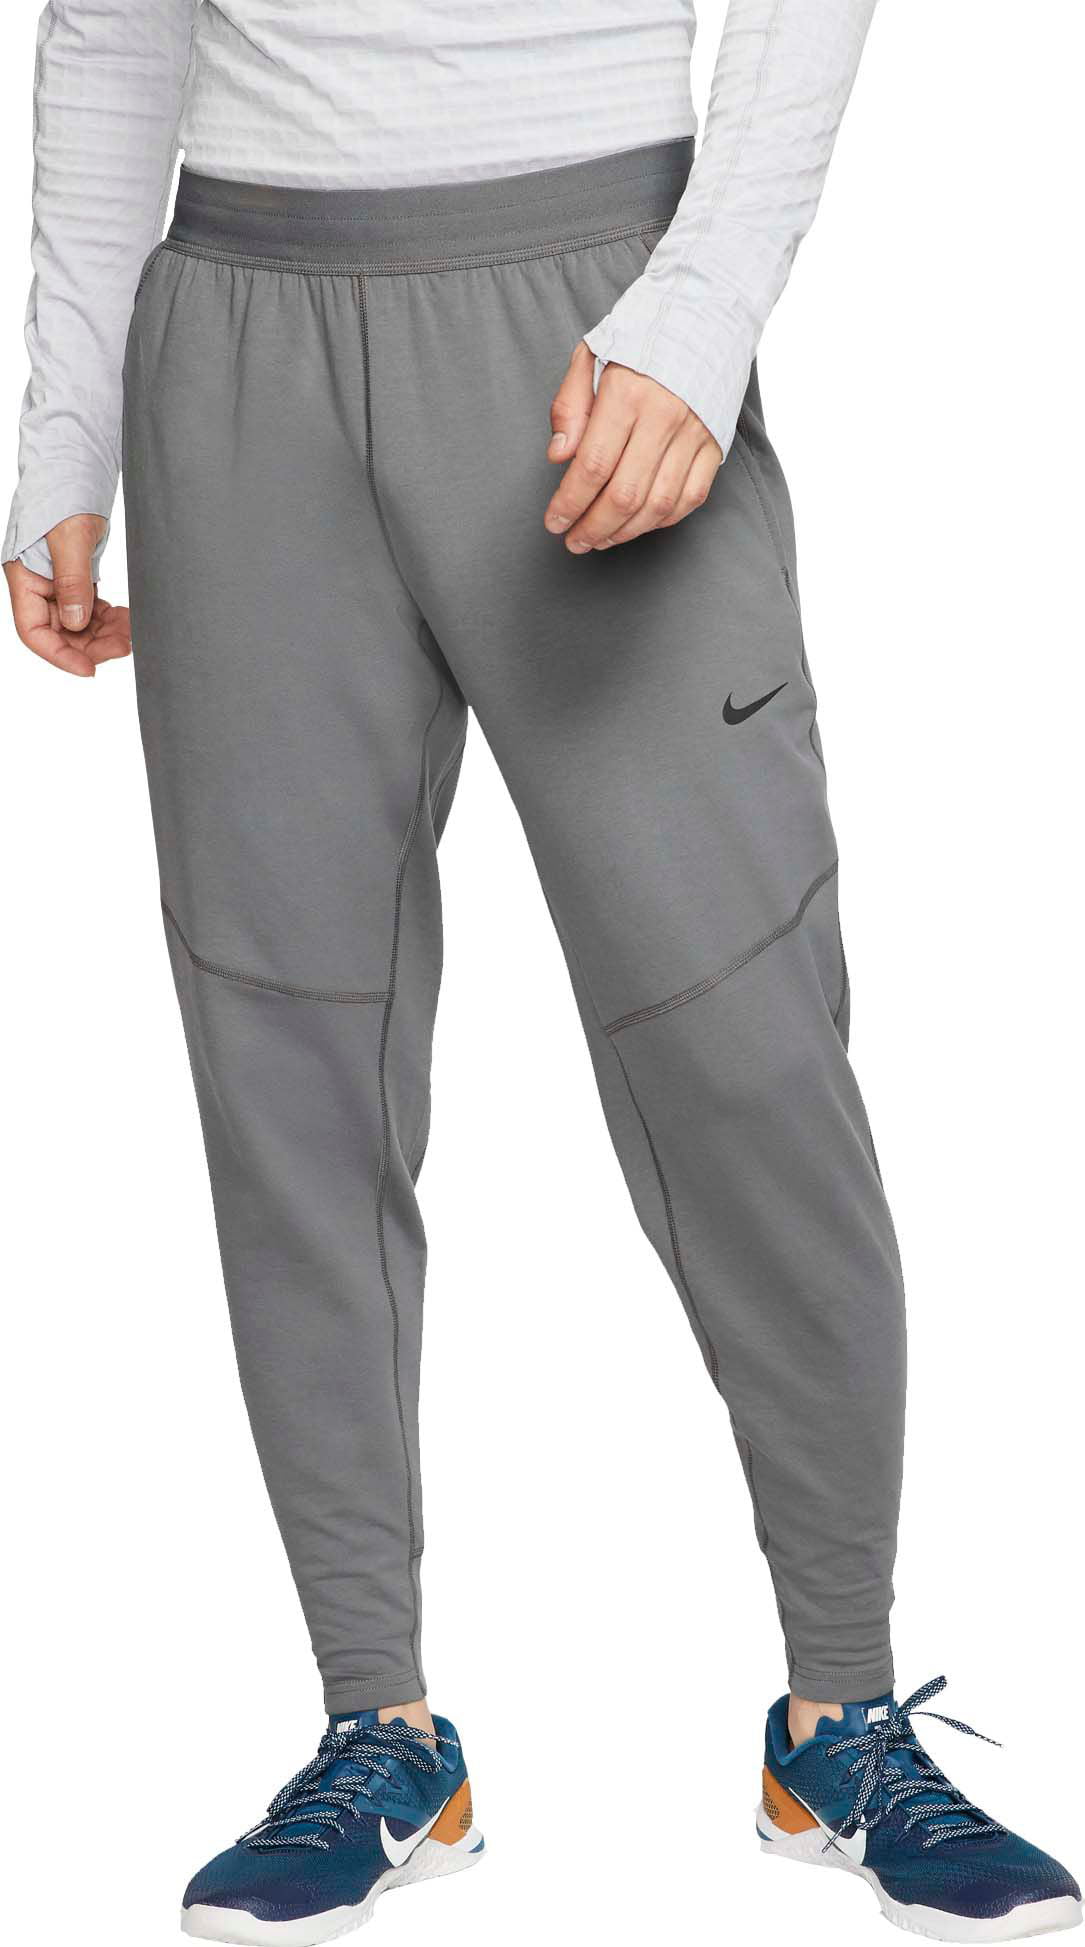 Nike - Nike Men's Yoga Dri-FIT Pants - Walmart.com - Walmart.com